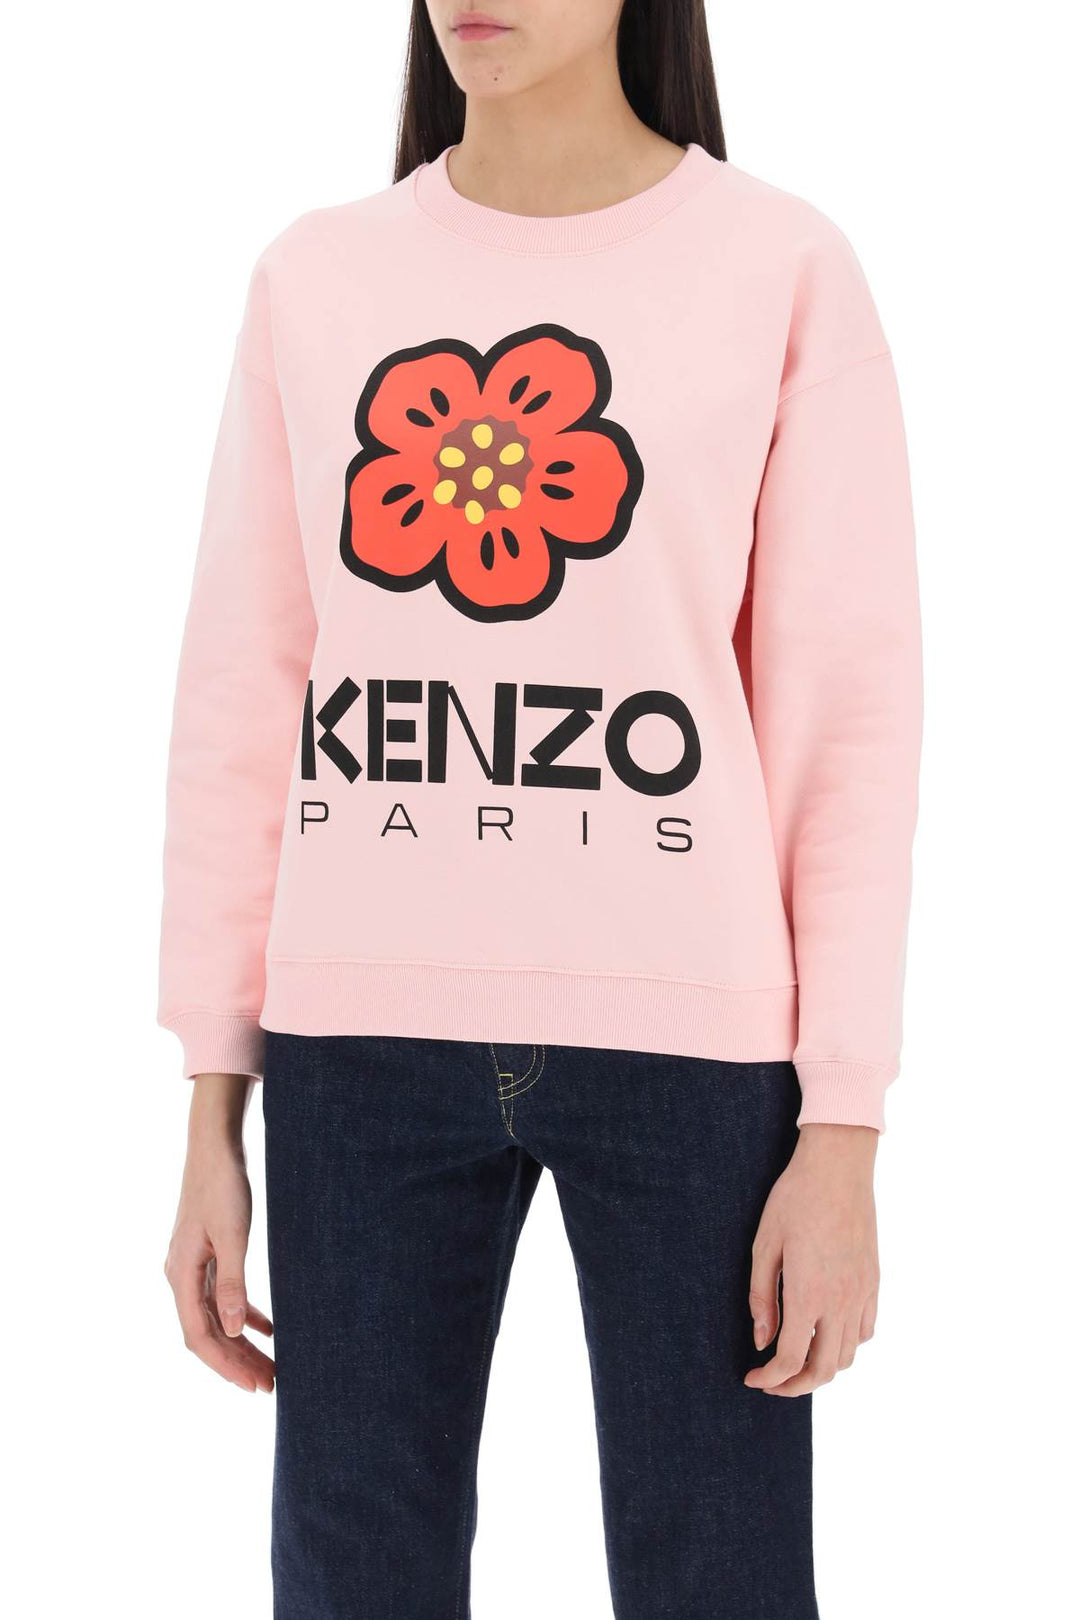 Kenzo Bokè Flower Crew Neck Sweatshirt   Rosa